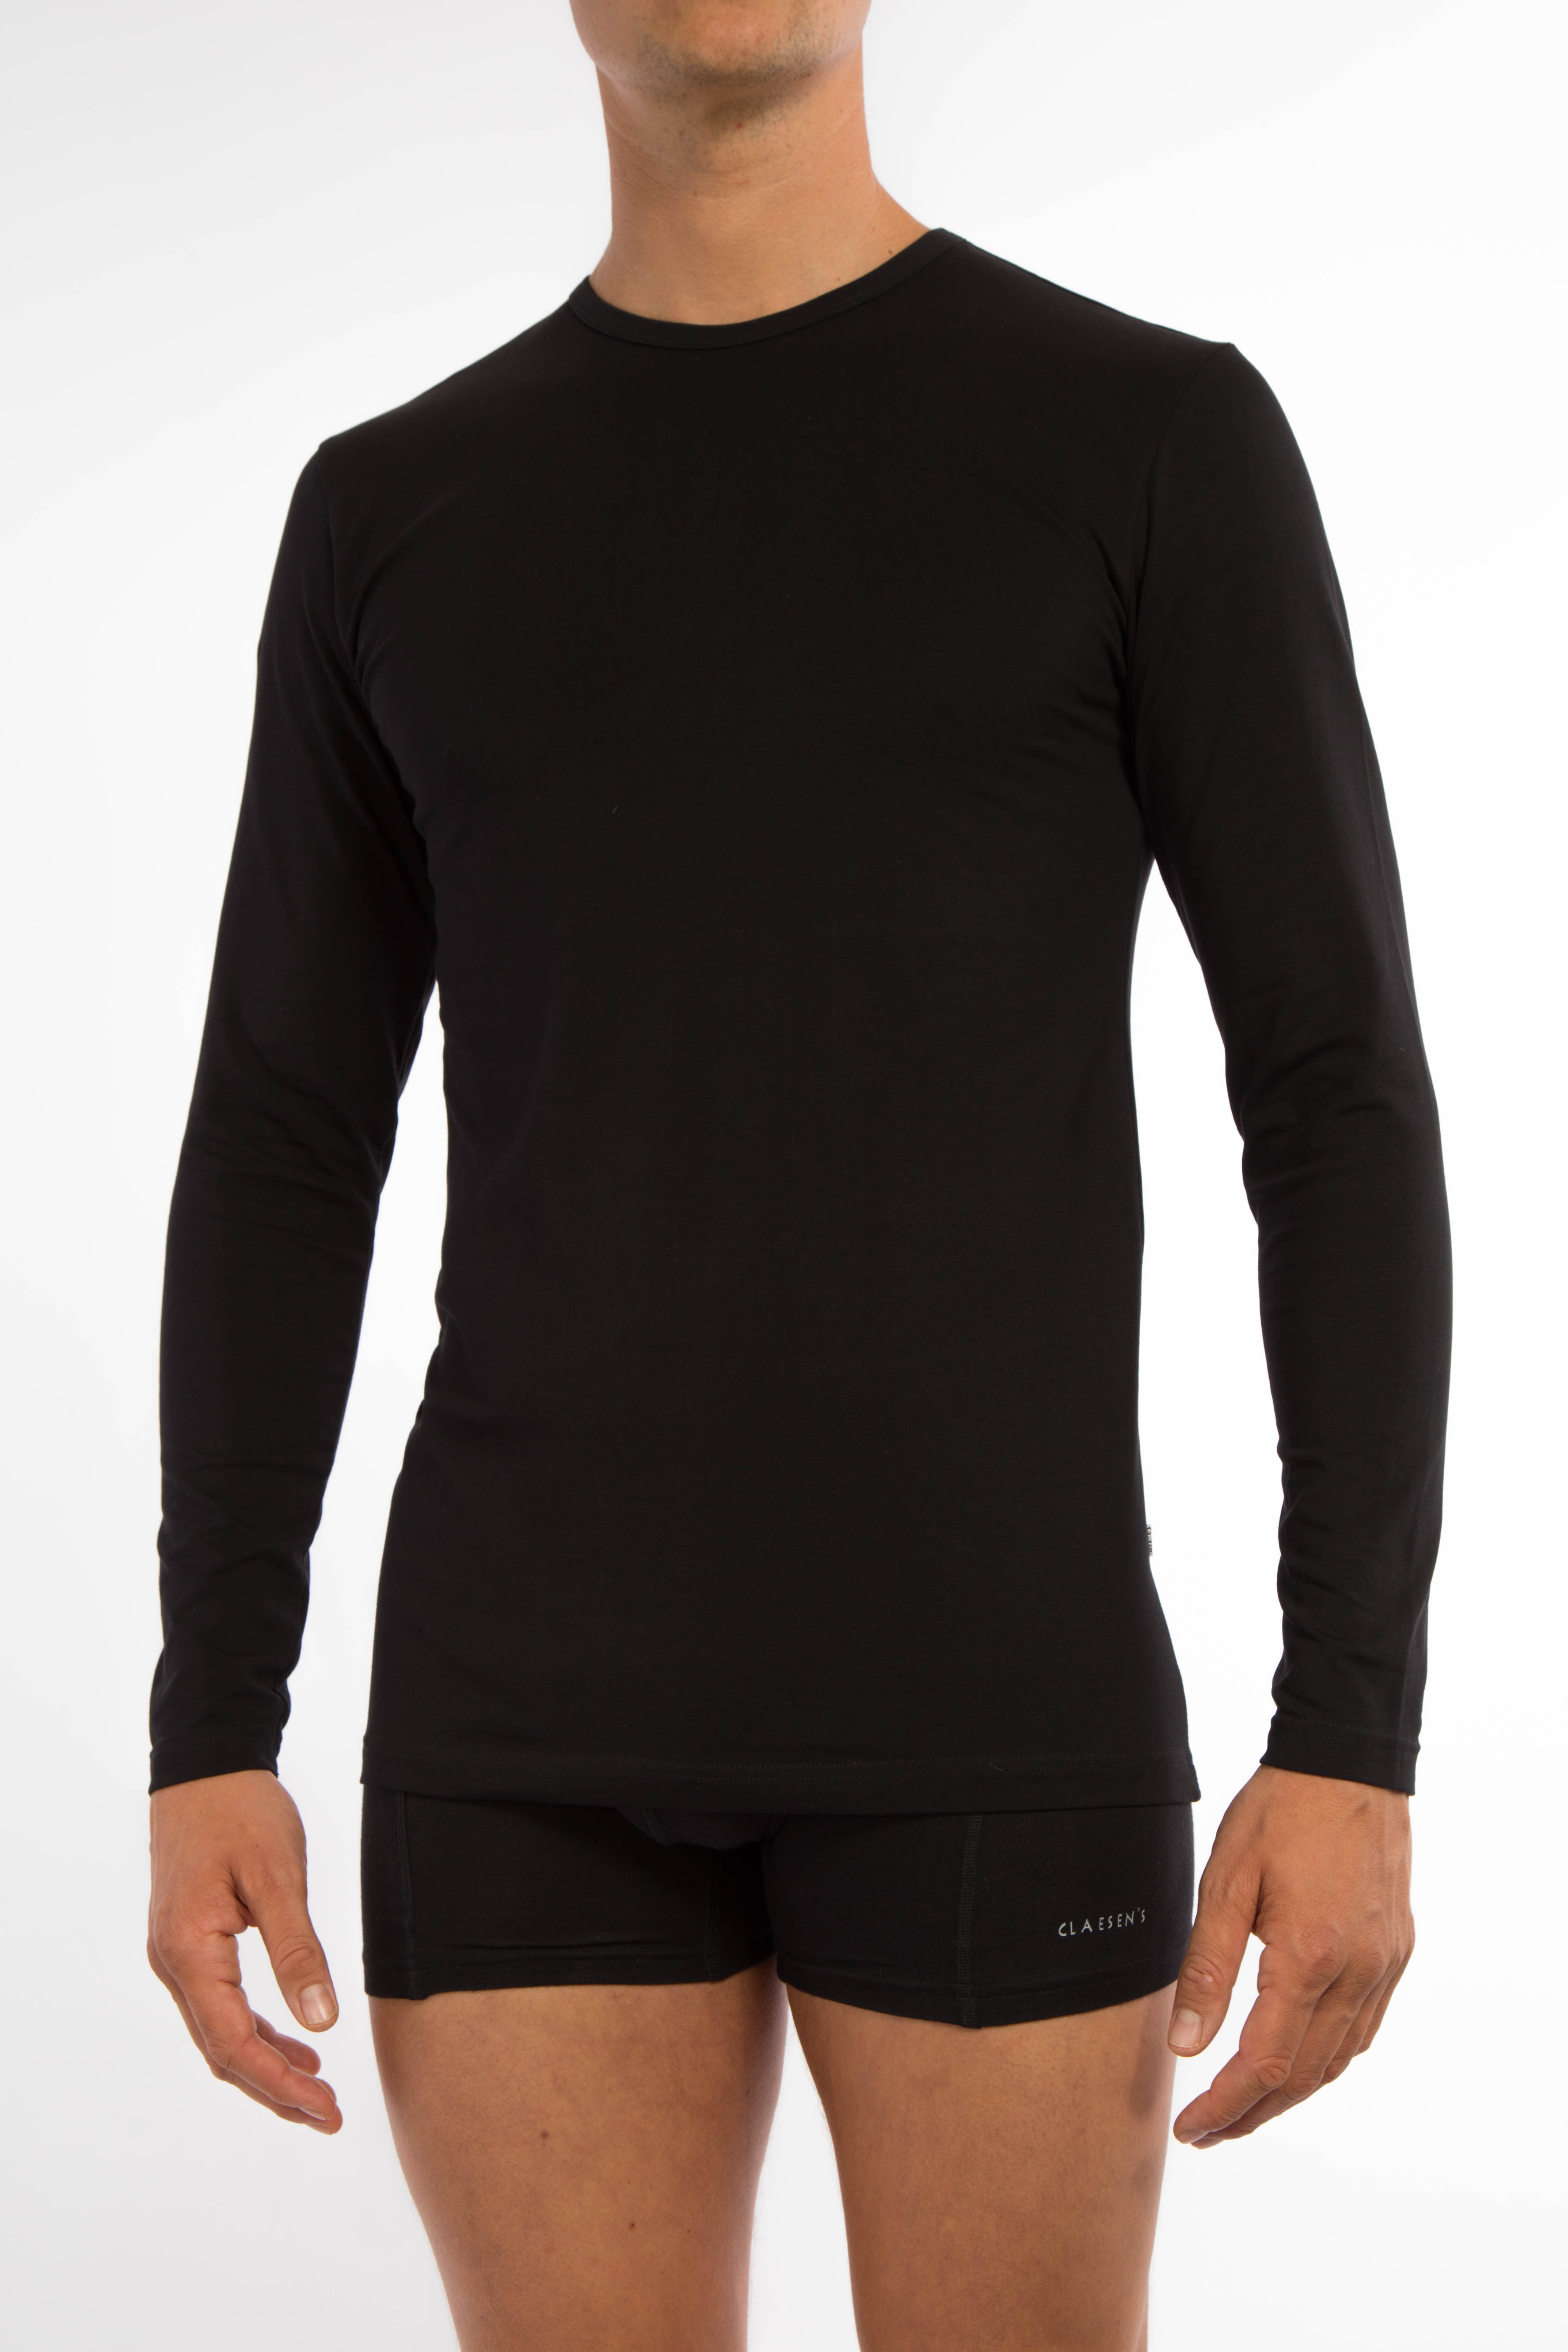 Claesen's Basics T-shirt (1-pack), heren T-shirt lange mouw, zwart